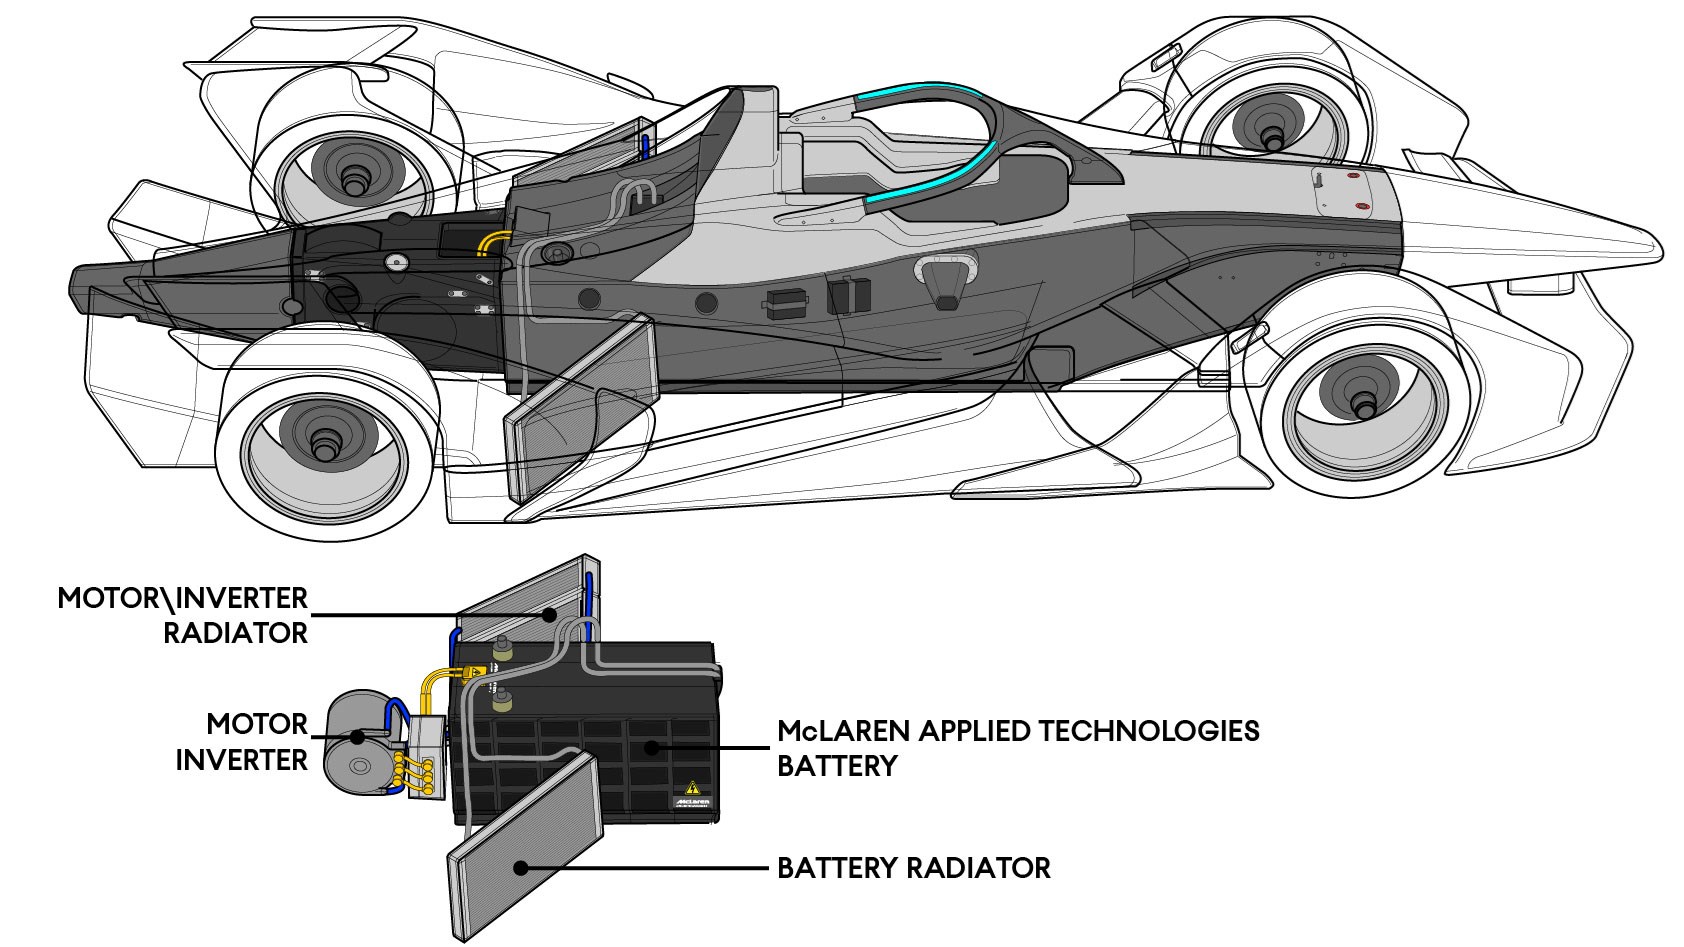 FORMULA-E-SEASON - Car illustrations and diagrams explaining the new  Formula-E electric motor racing championship. Wi…